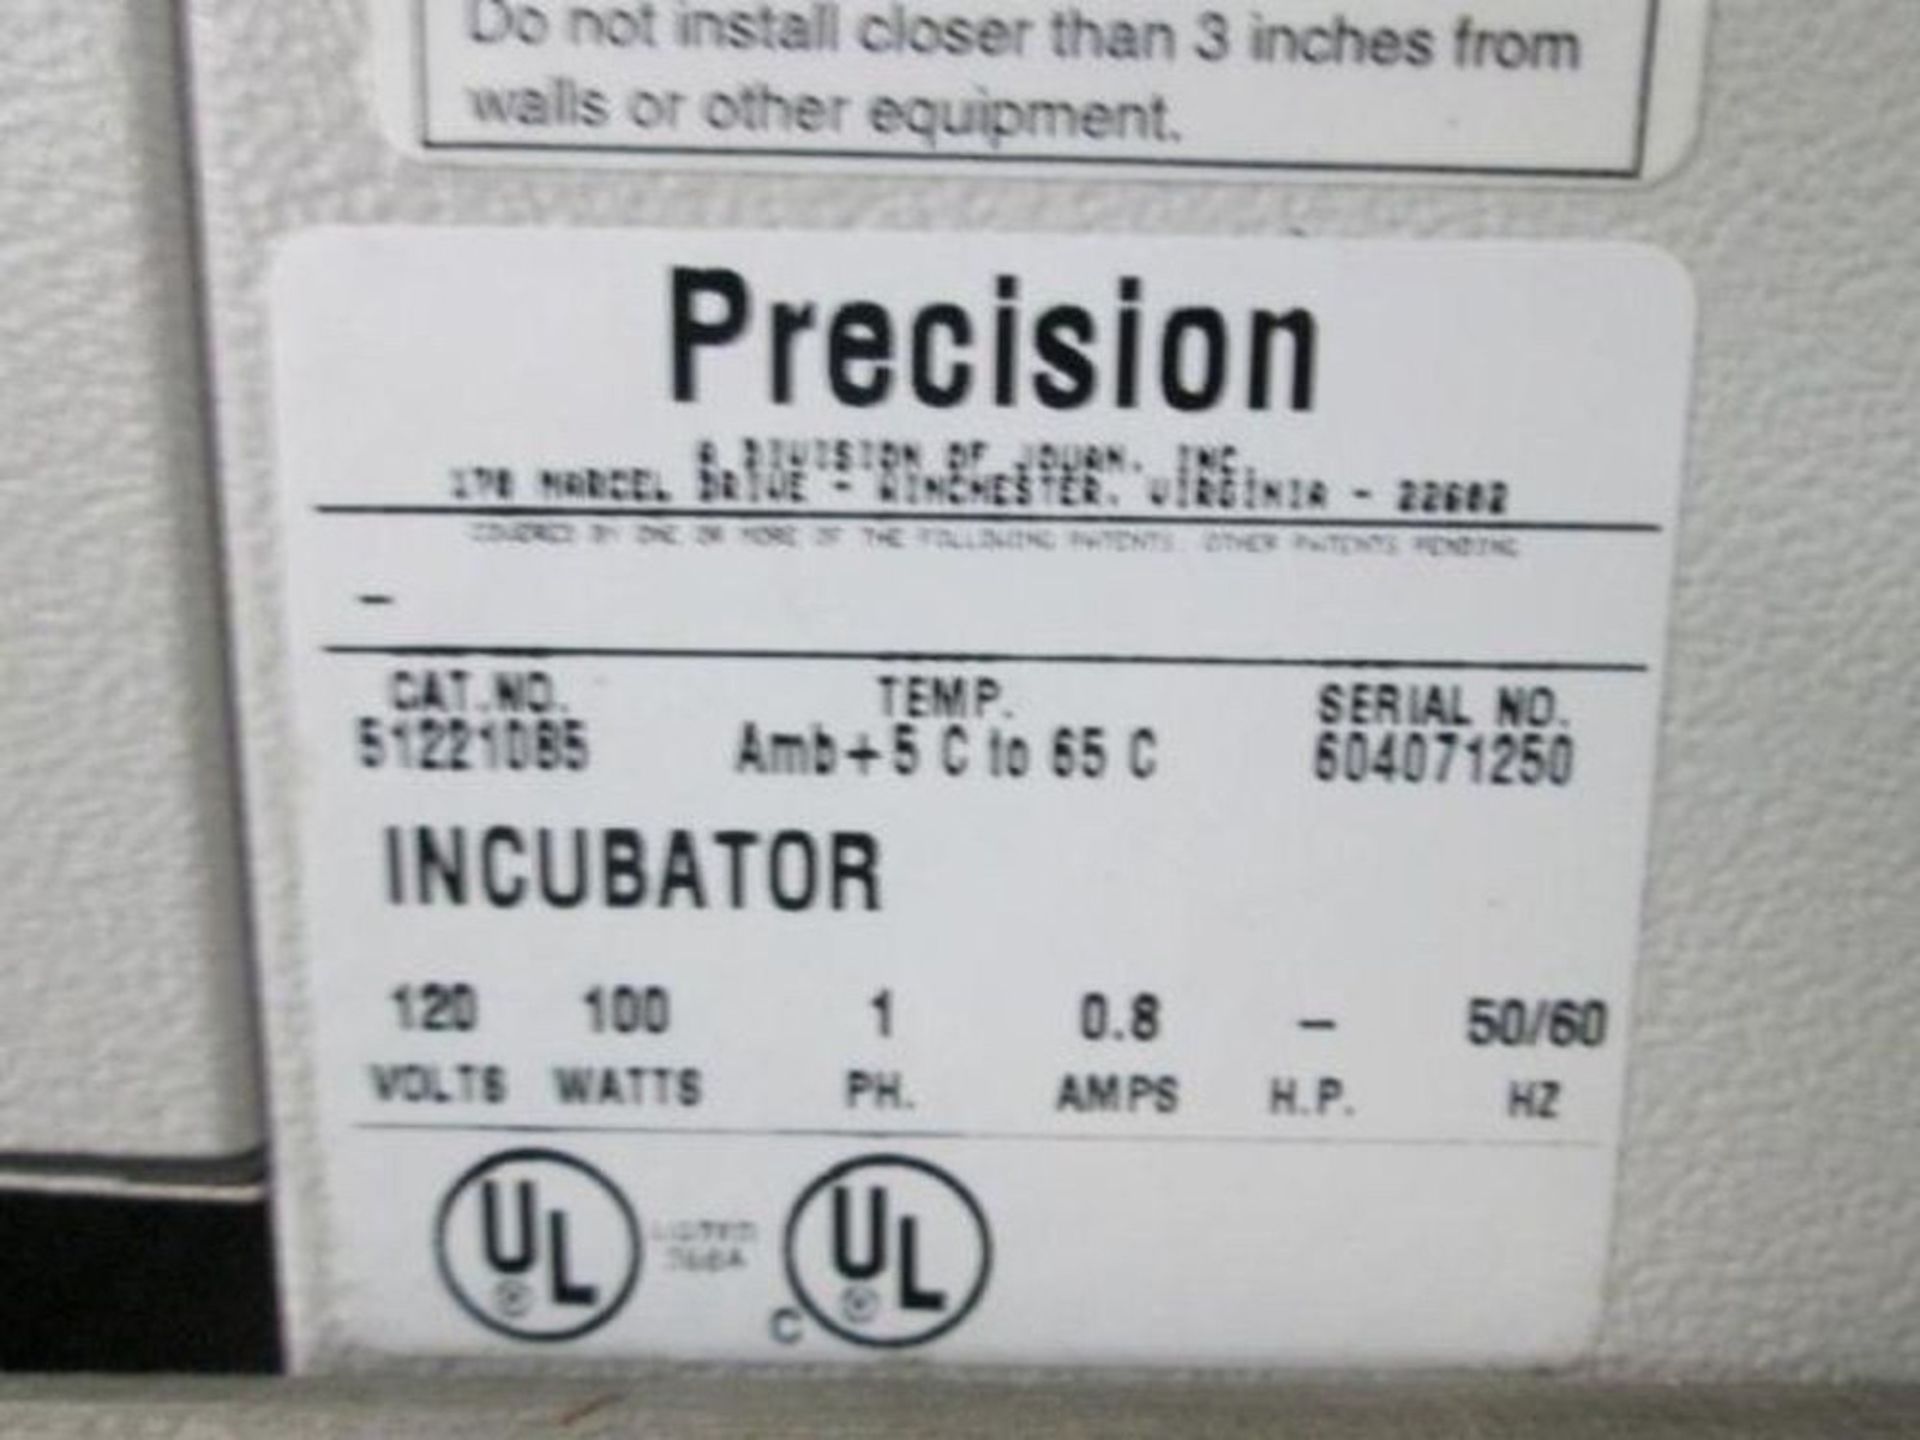 Precision Model 51221085 Incubator, Dimension: 12 X 14" X 14", Temperature: | No Charge for Loading - Image 3 of 3